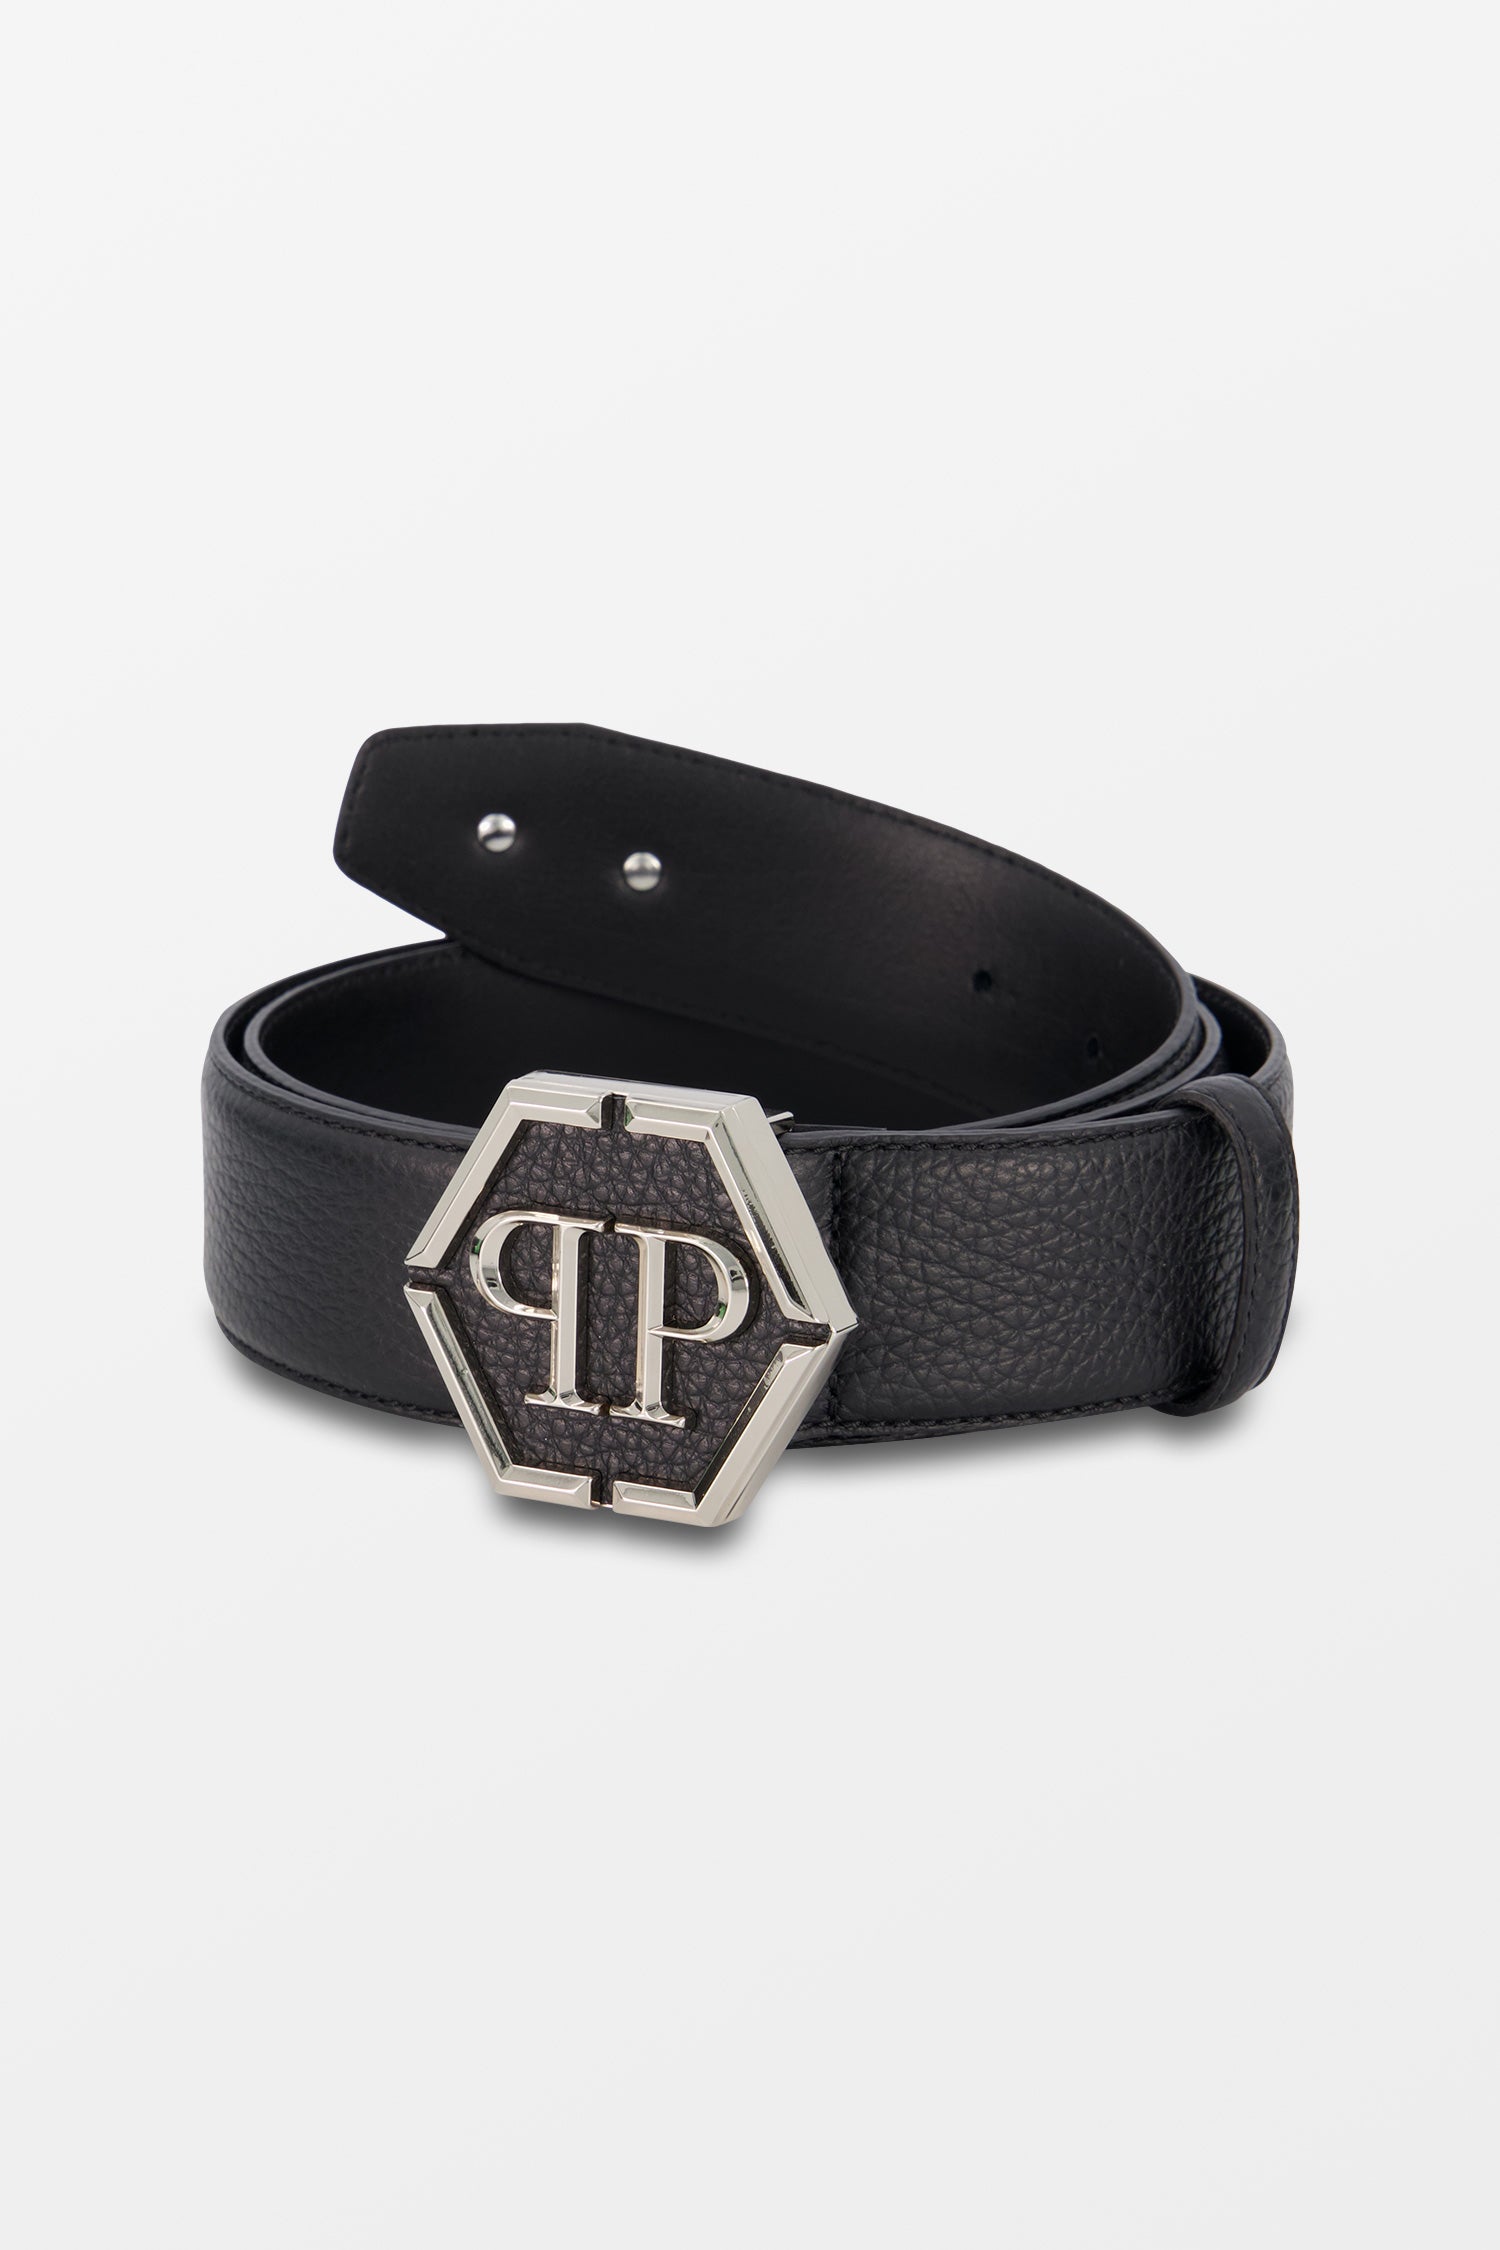 Philipp Plein Black Leather Iconic Plein Belt